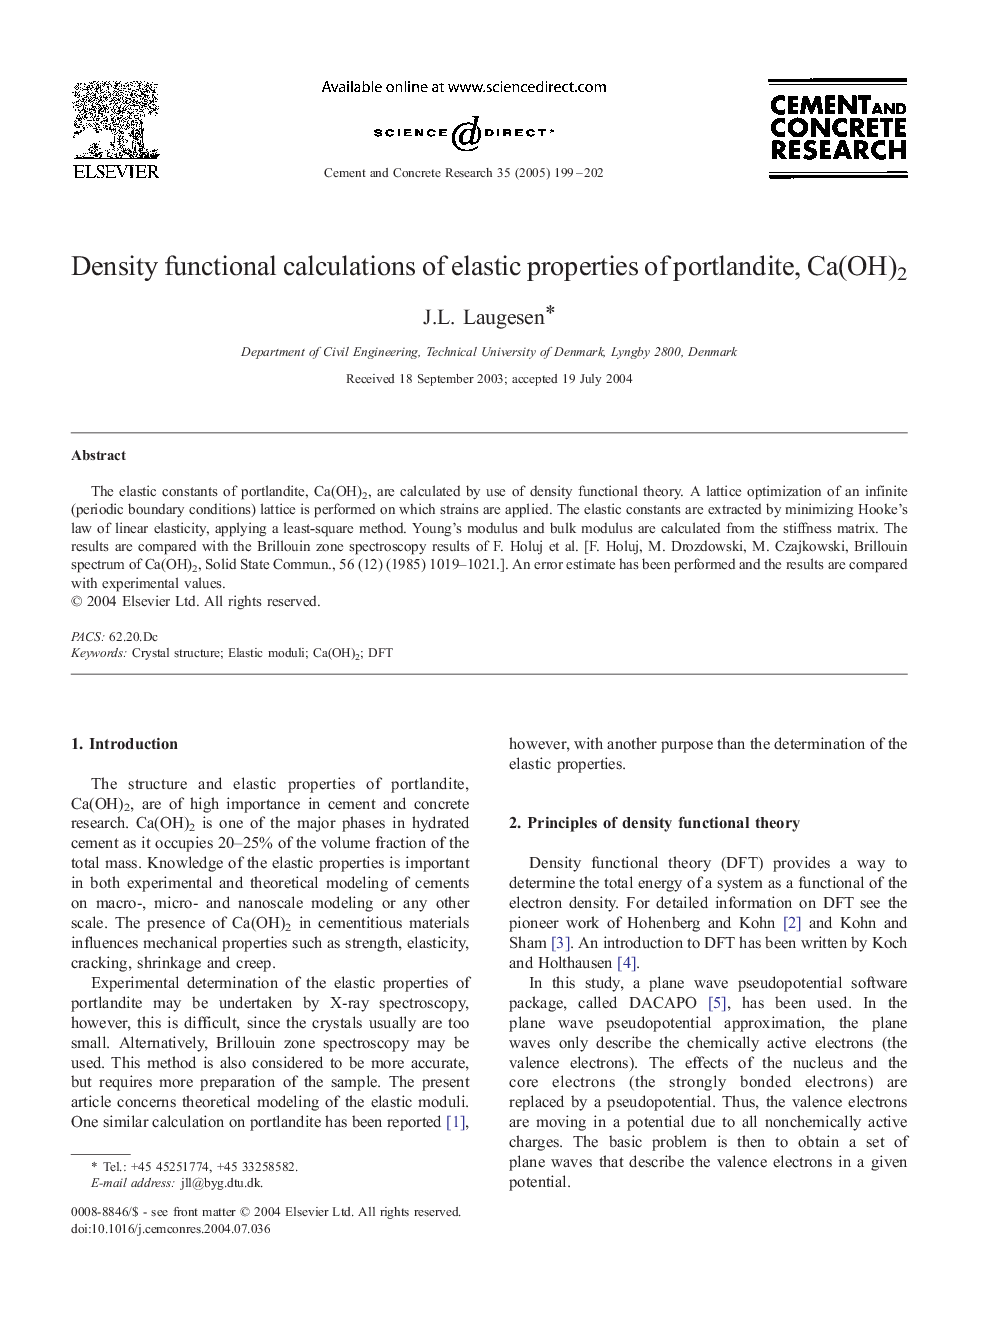 Density functional calculations of elastic properties of portlandite, Ca(OH)2